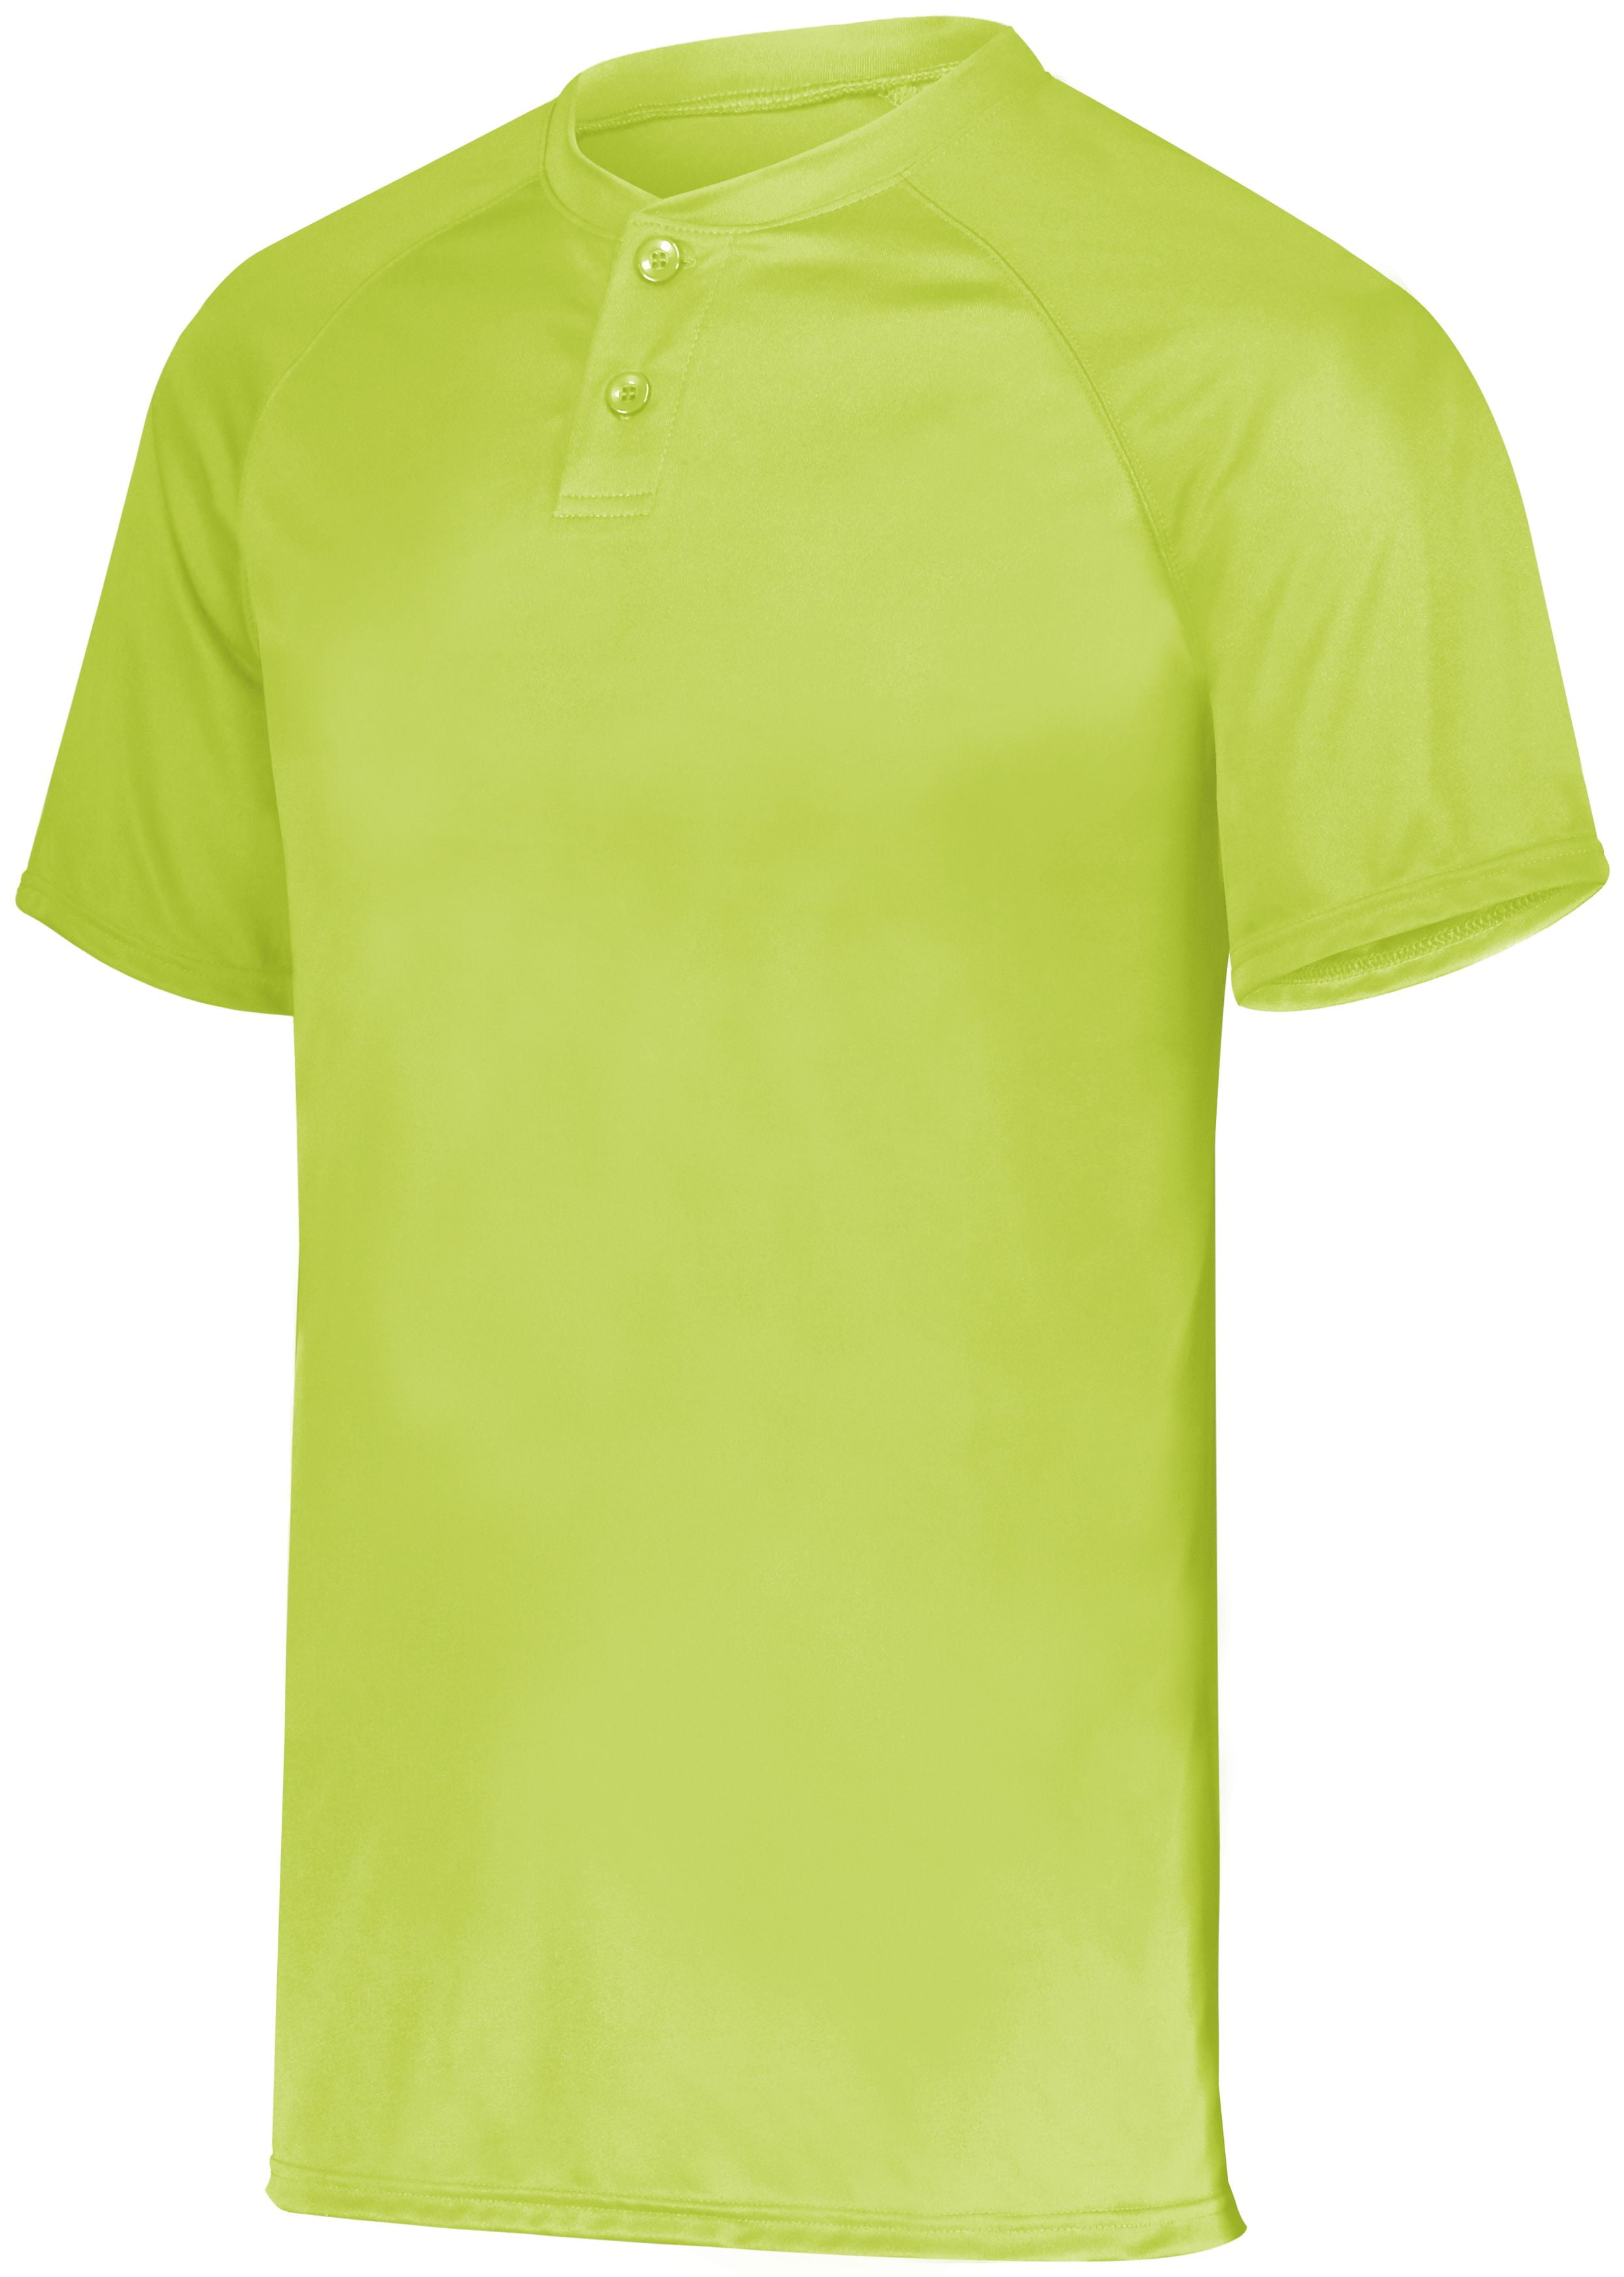 644 Augusta Sportswear Youth Double Needle Two Button Jersey Baseball T-Shirt 